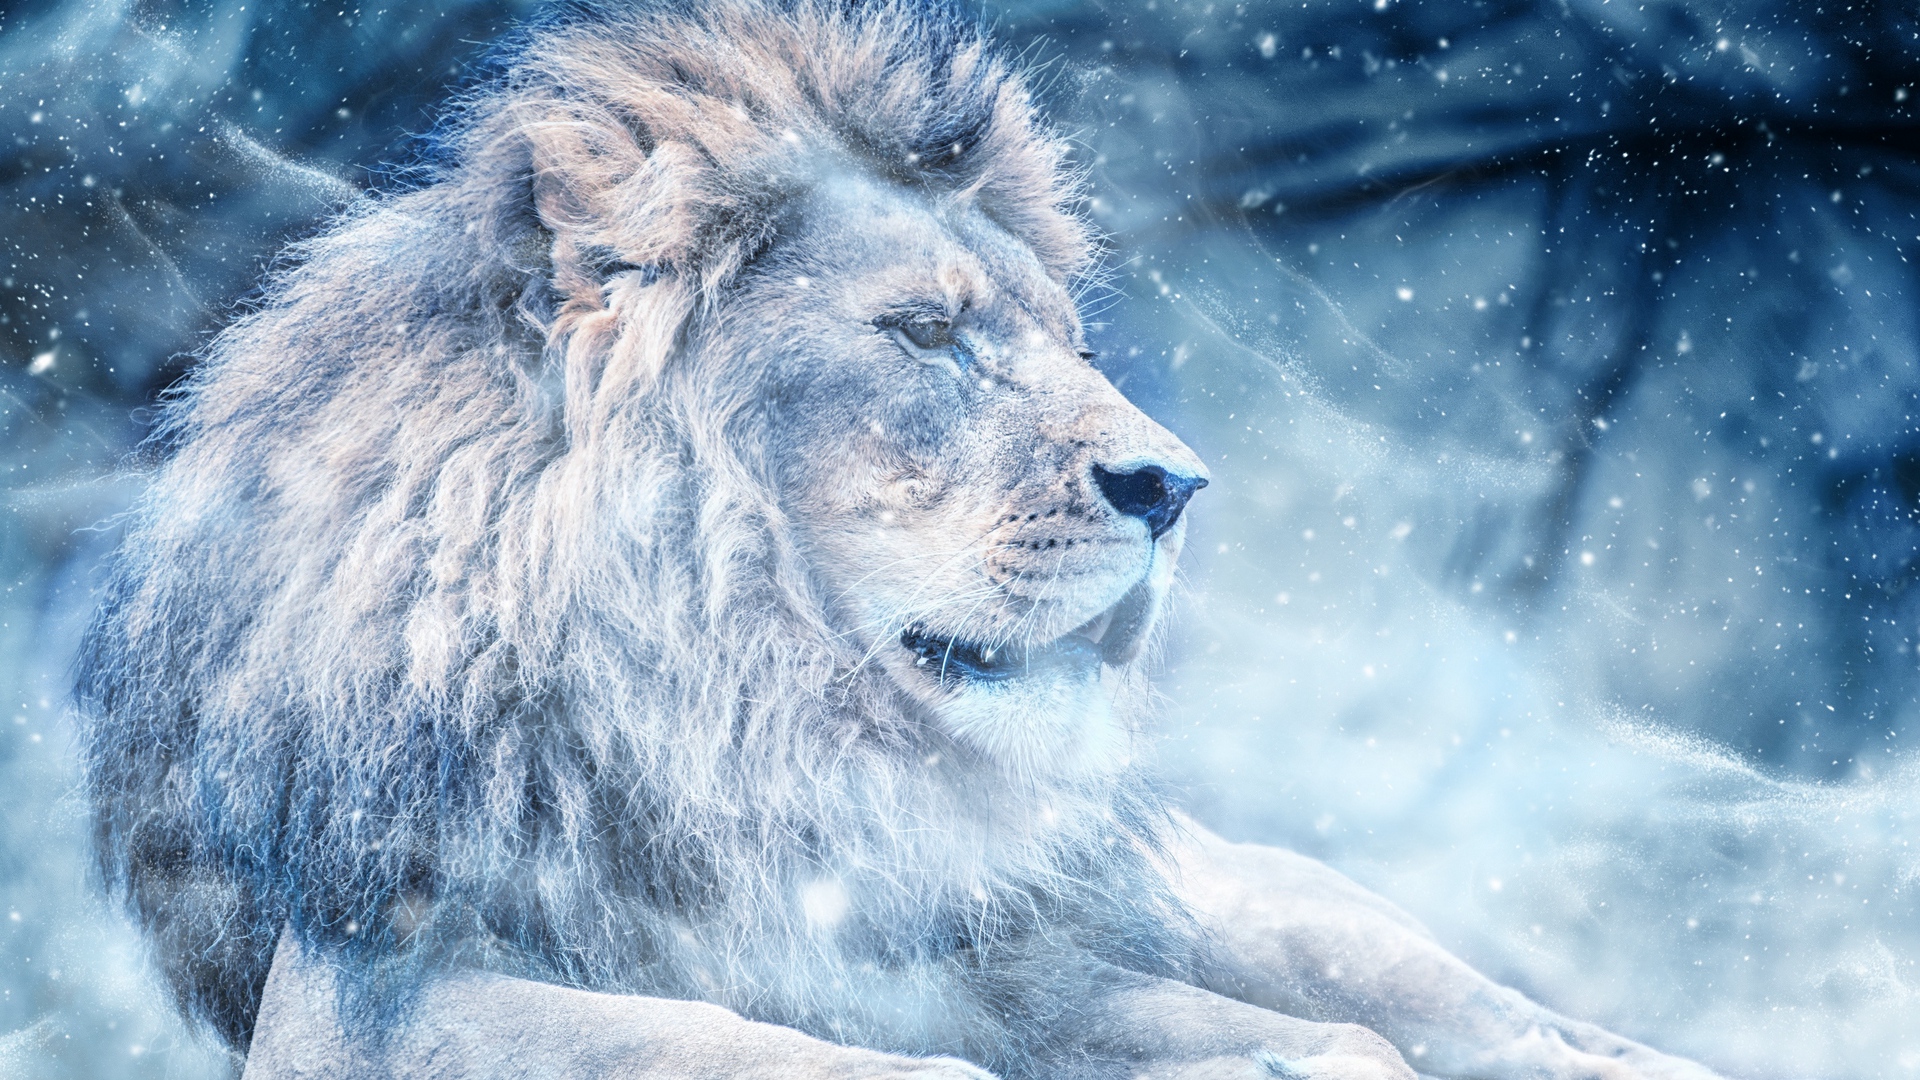 Download wallpaper 1920x1080 lion, snow, big cat, king of beasts